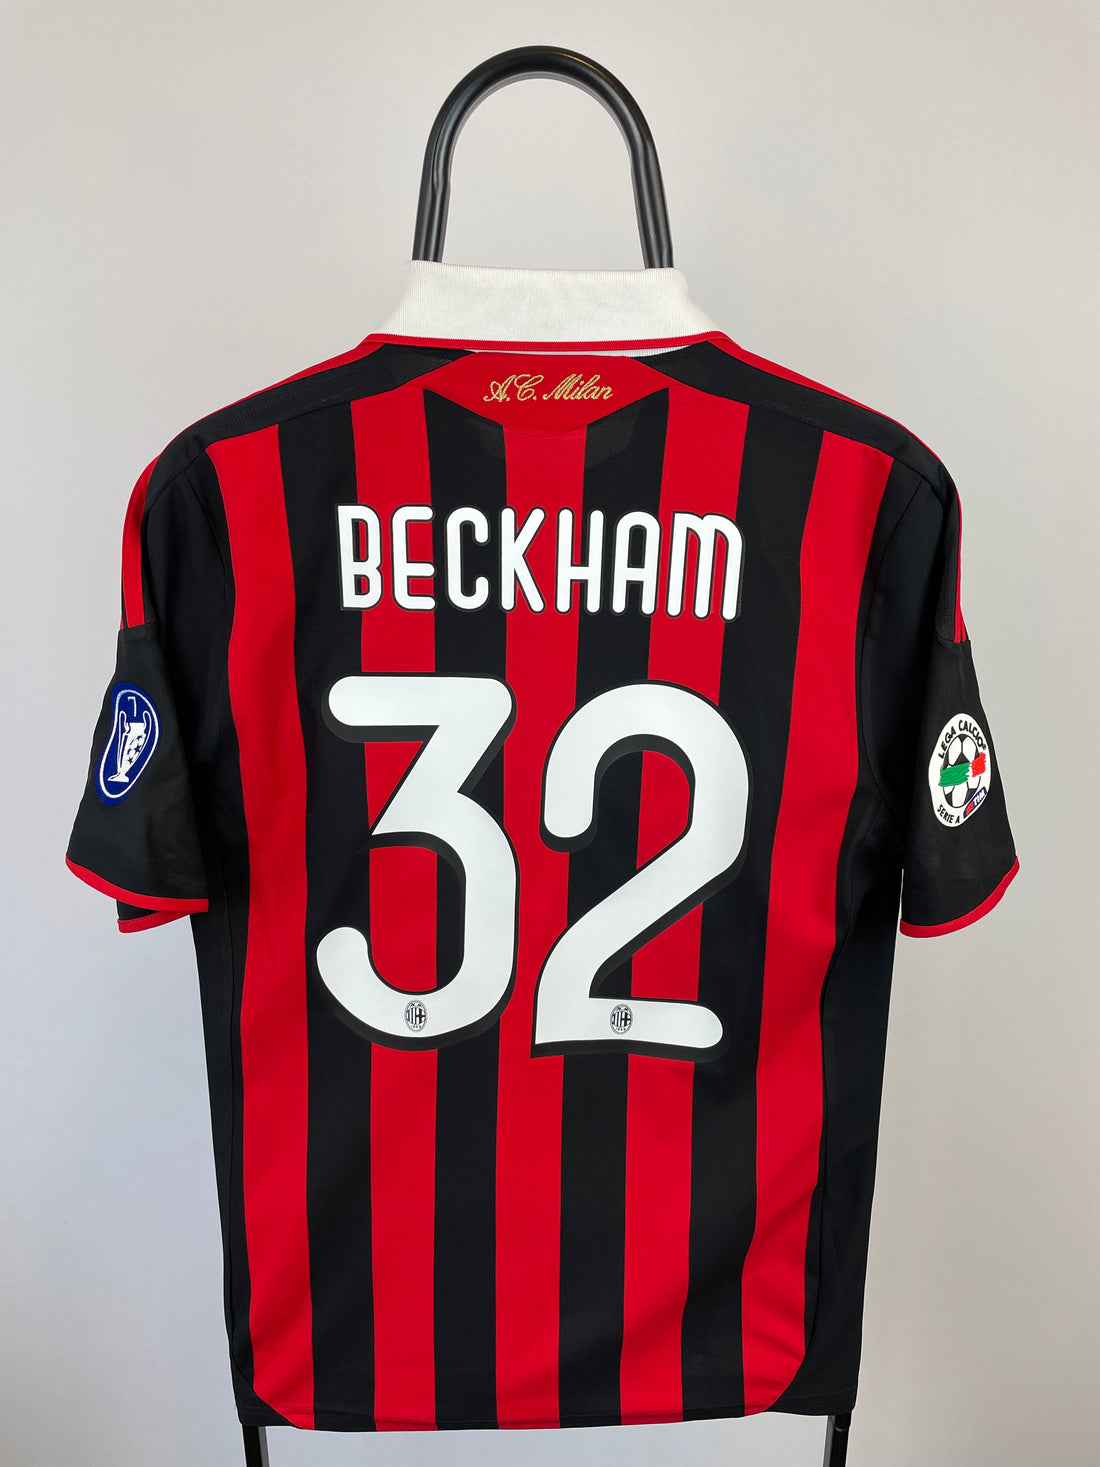 David Beckham AC Milan 09/10 hjemmebanetrøje - S